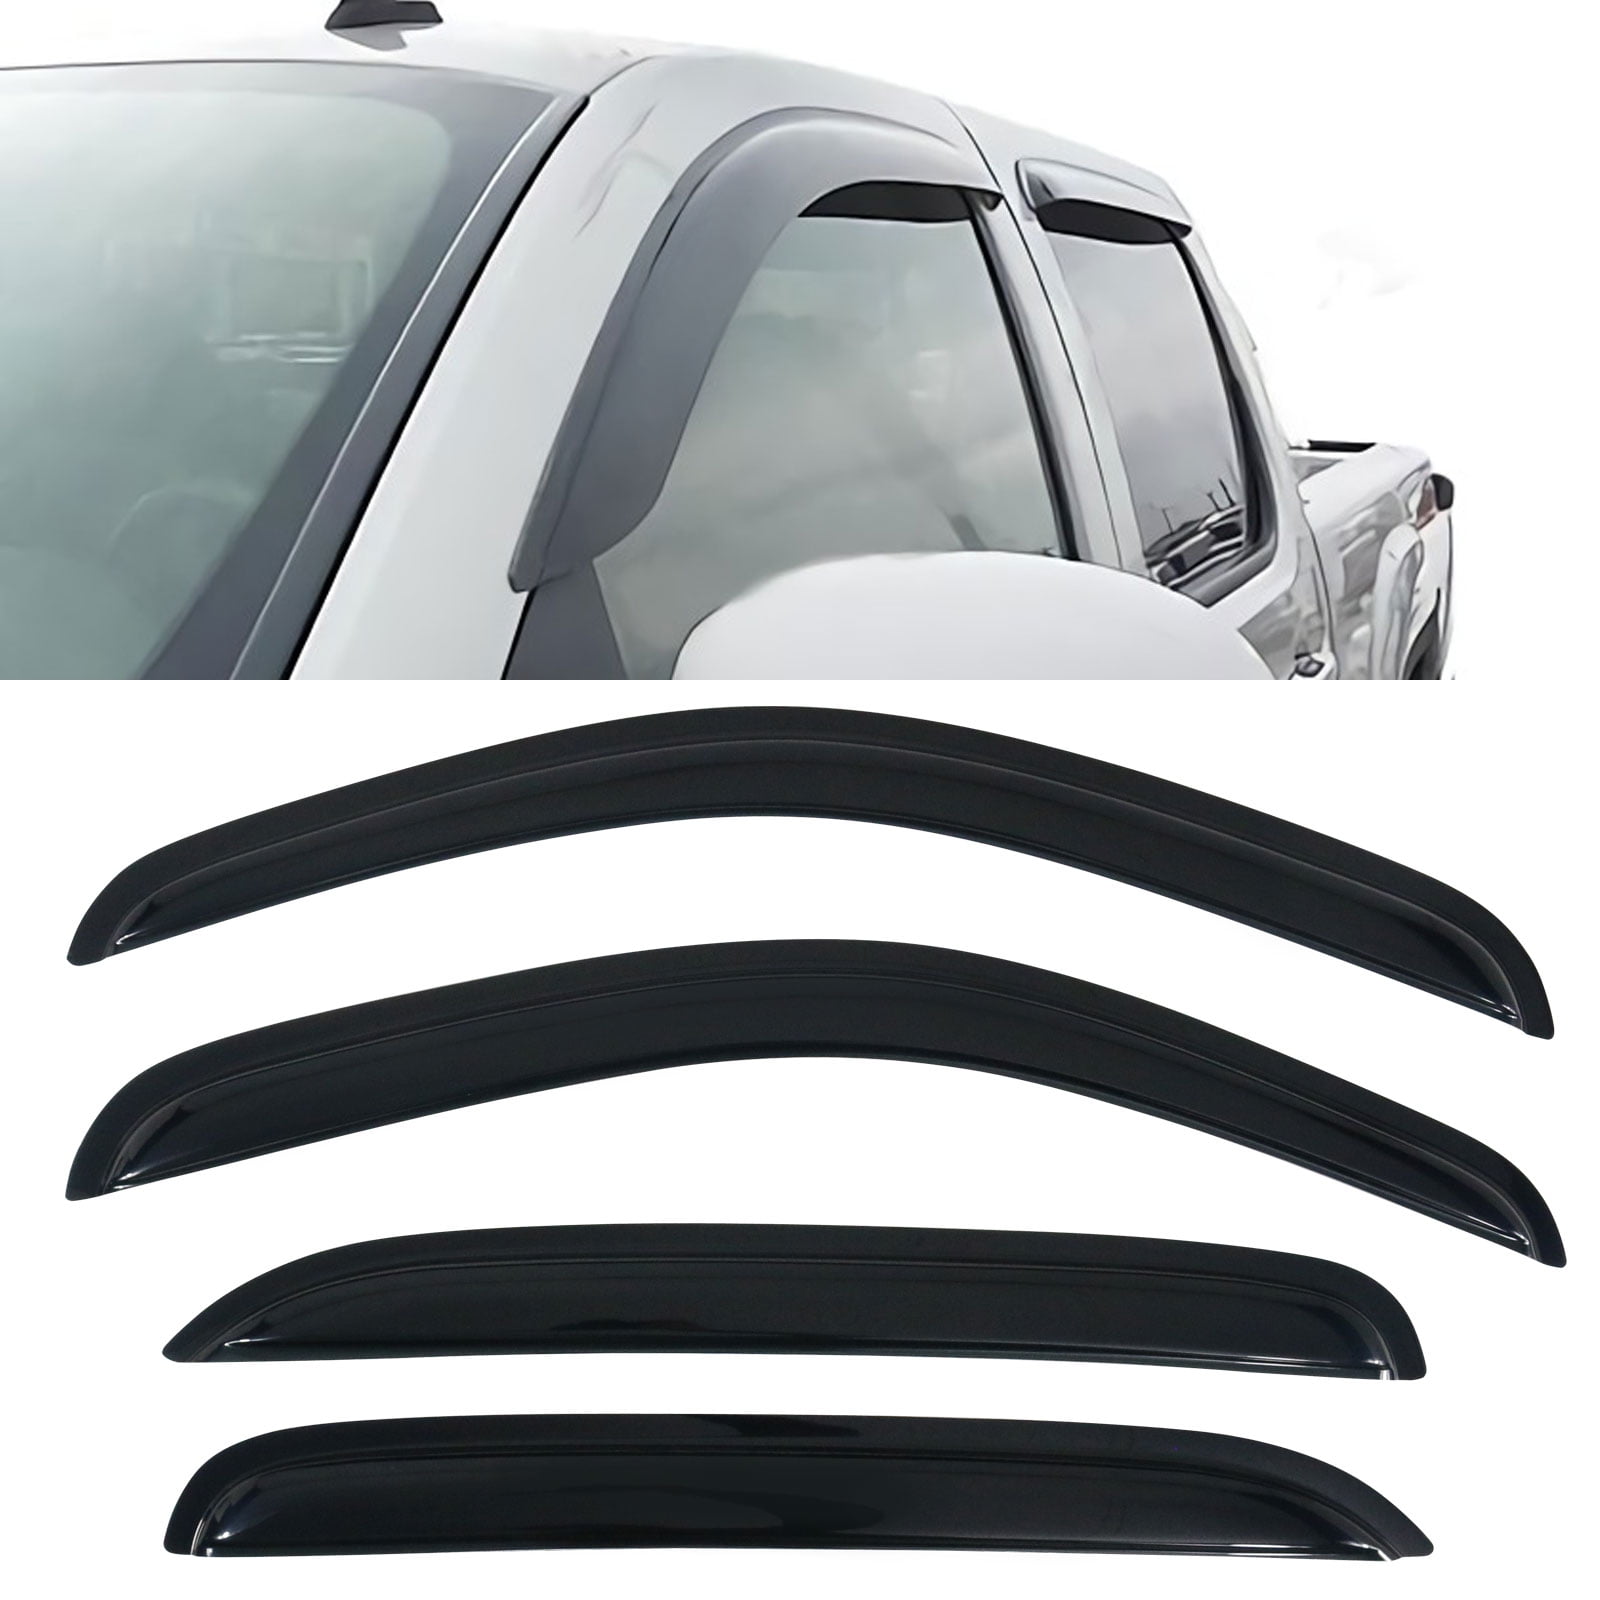 4 Piece Set Optimal Co 2019-2021 Smoke Tinted Tape-On Side Window Vent Visor Deflectors Rain Guards for Chevrolet Silverado 1500 Crew Cab & for GMC Sierra 1500 Crew Cab Pickup Truck 